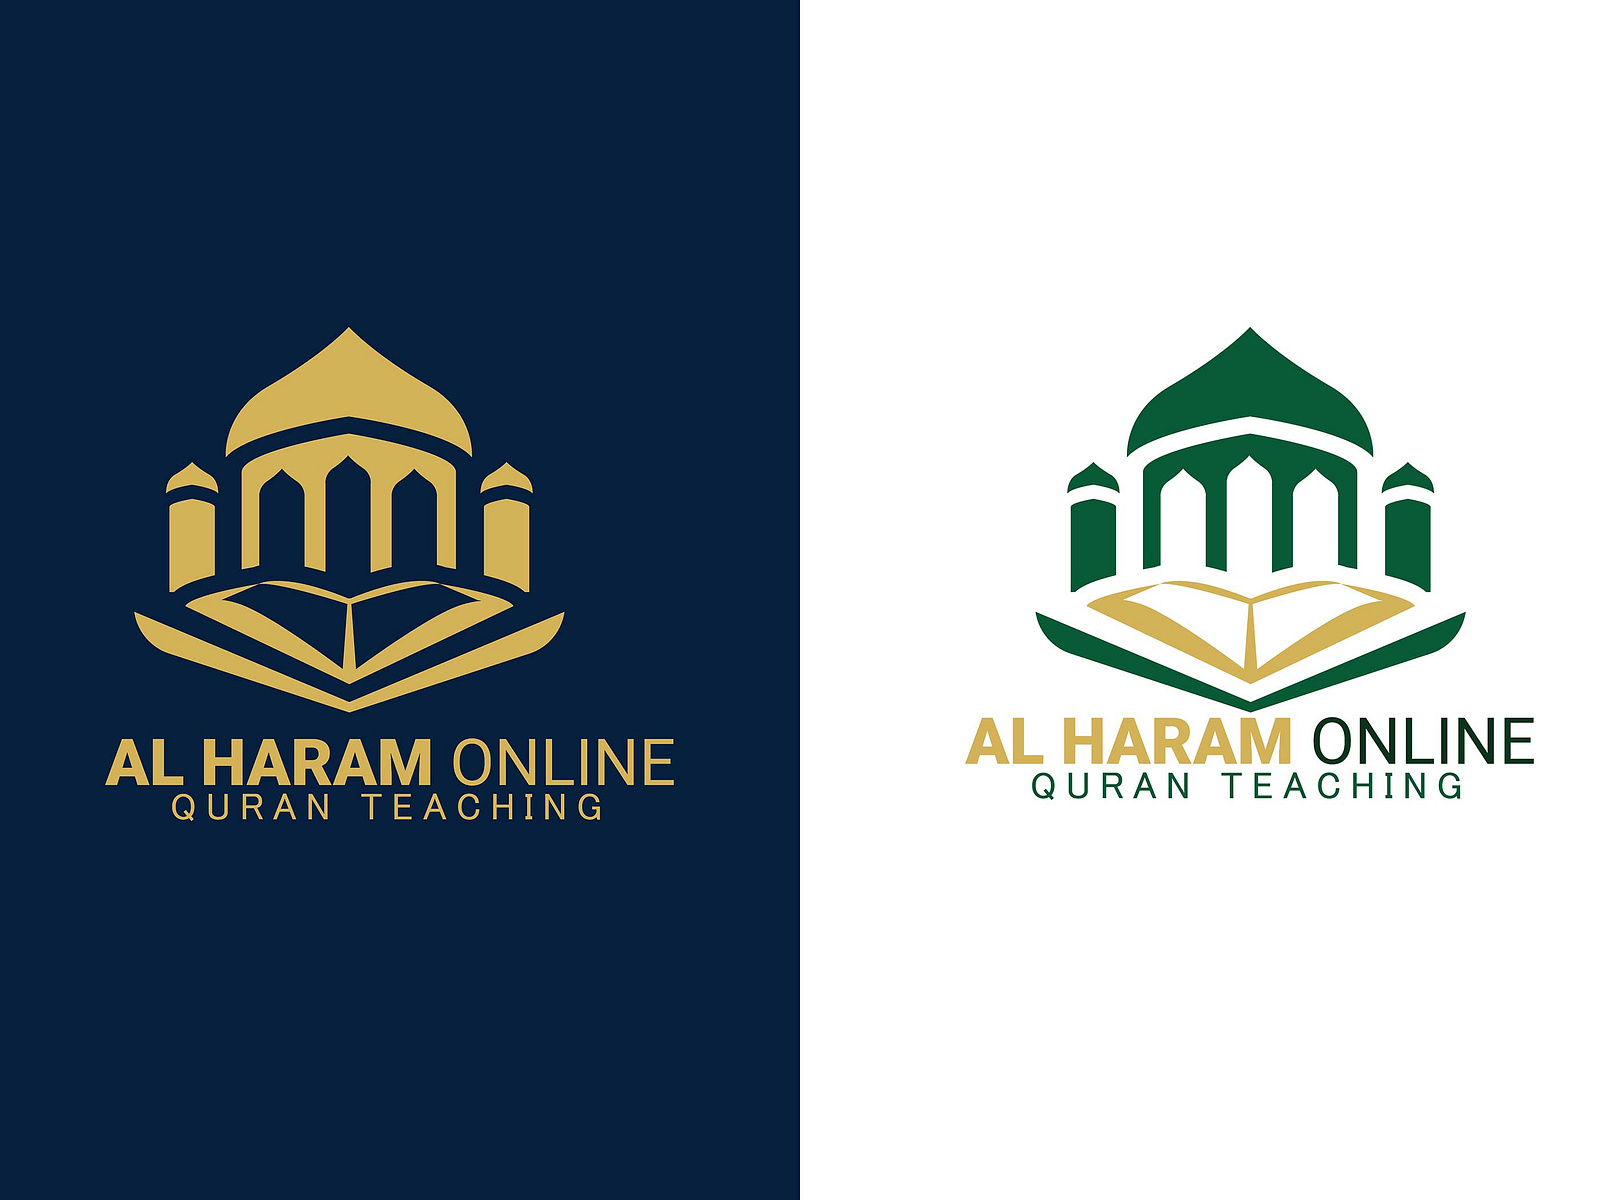 Islamic Logo Design #logodesign by Muhammad BIlal on Dribbble